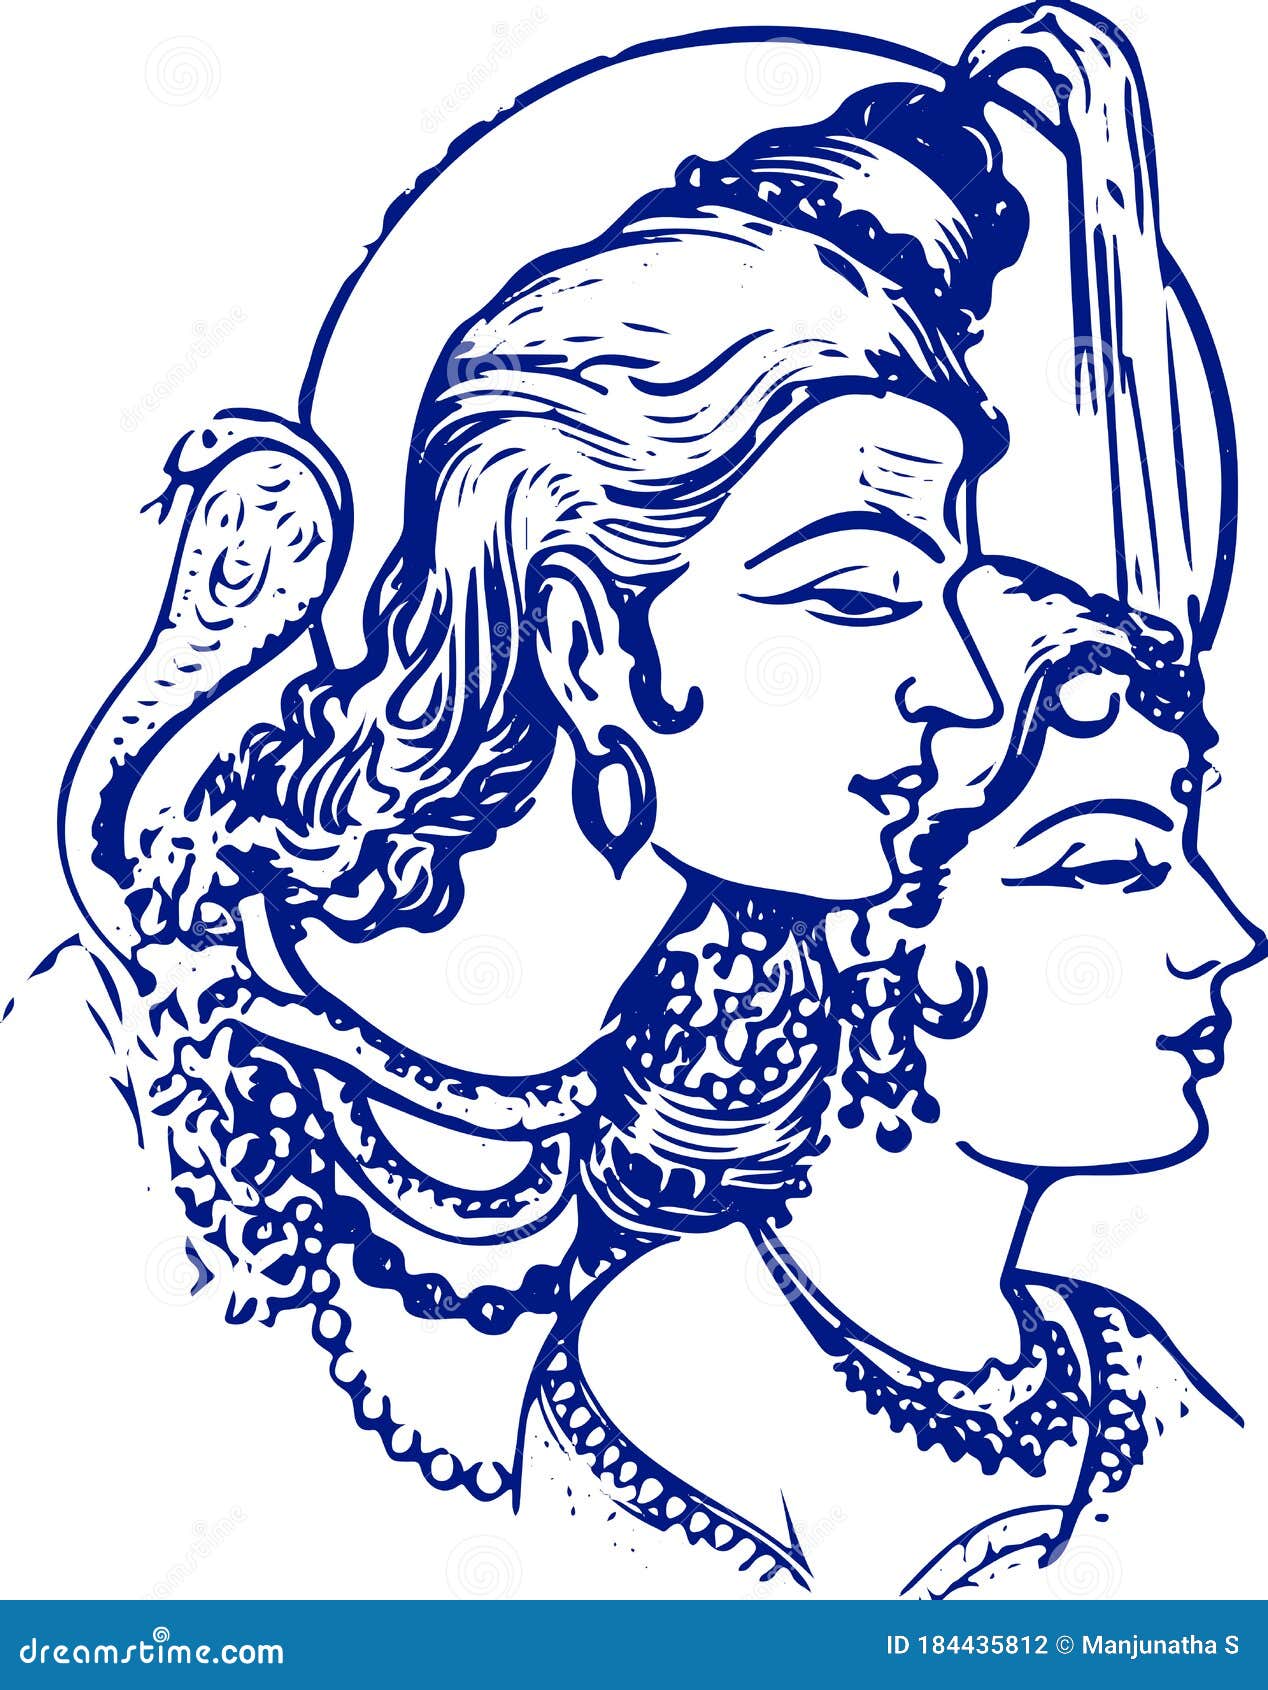 Wisdom of Hinduism Shiva As Ardhanarishwar and eight idols of Shiva